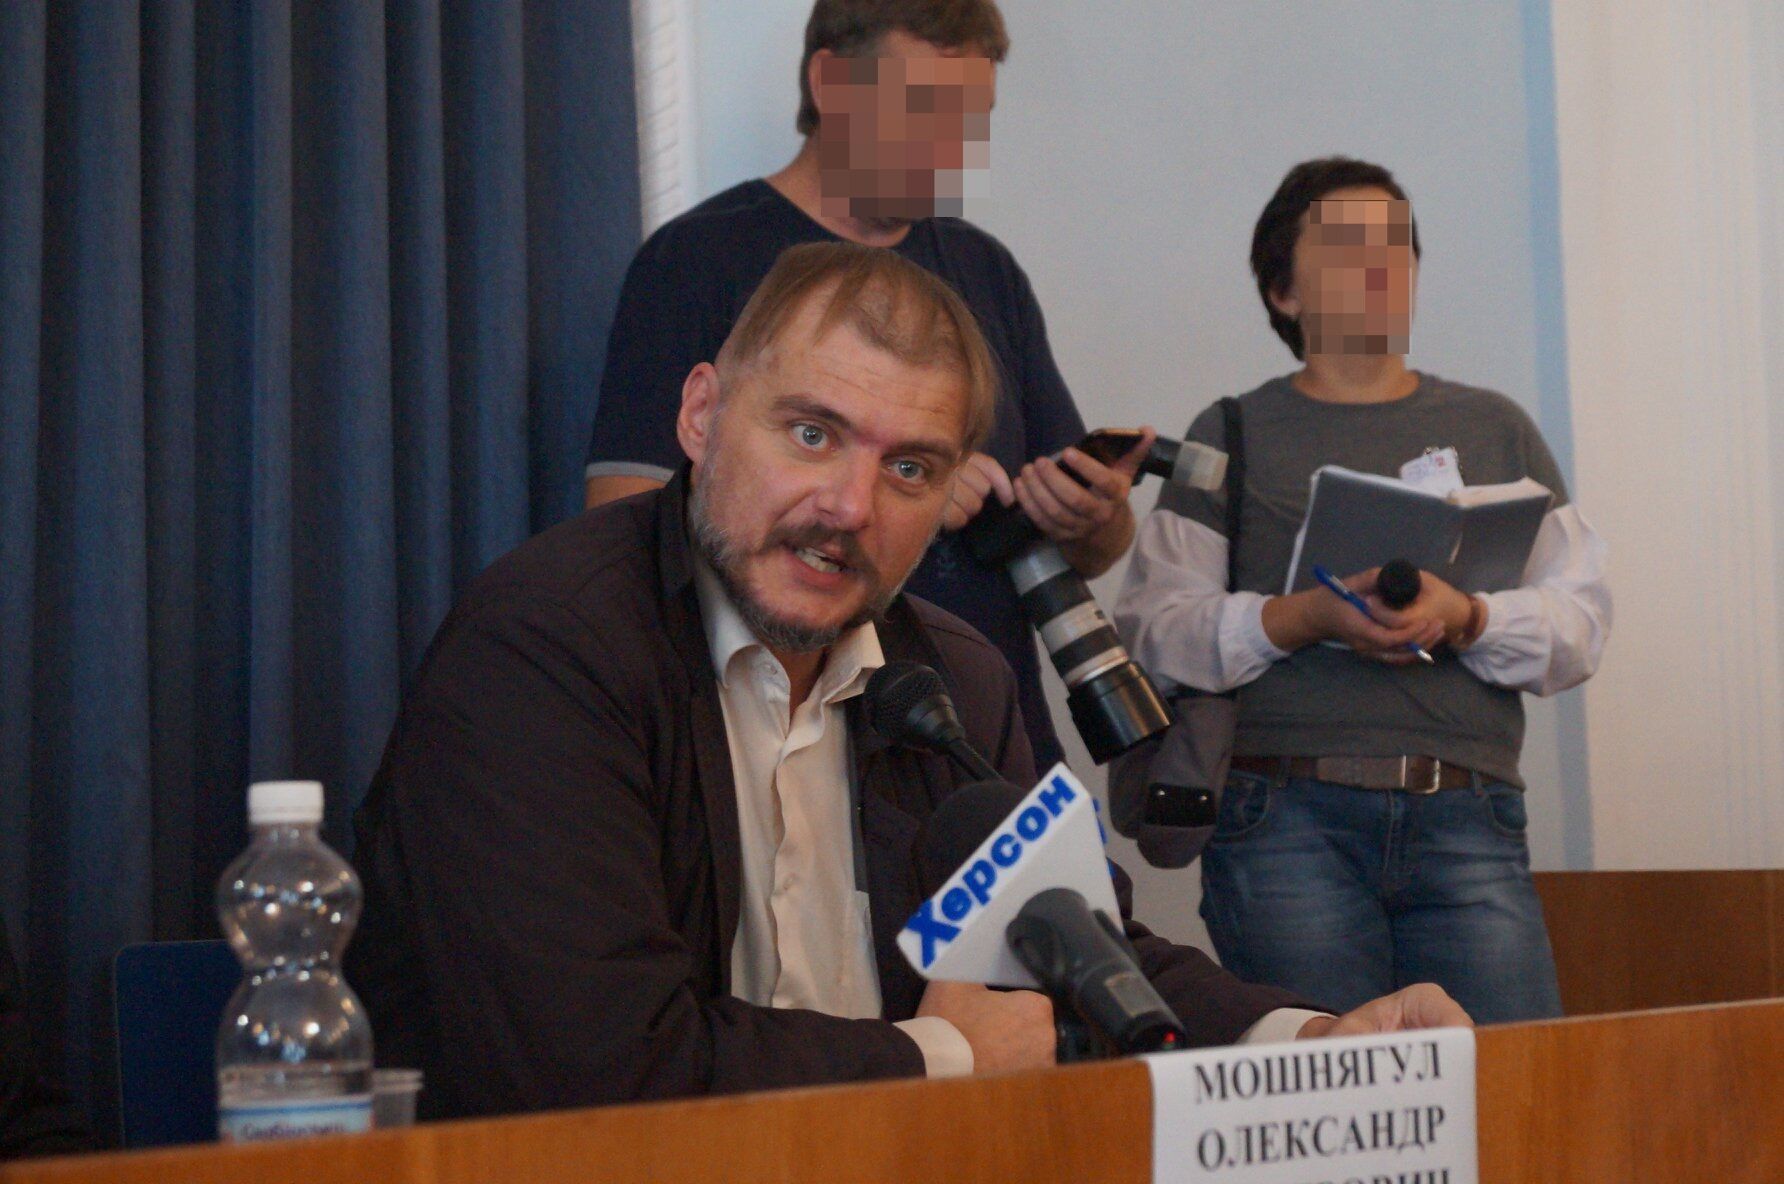 Владимир Молчанов – херсонский политолог, экономист